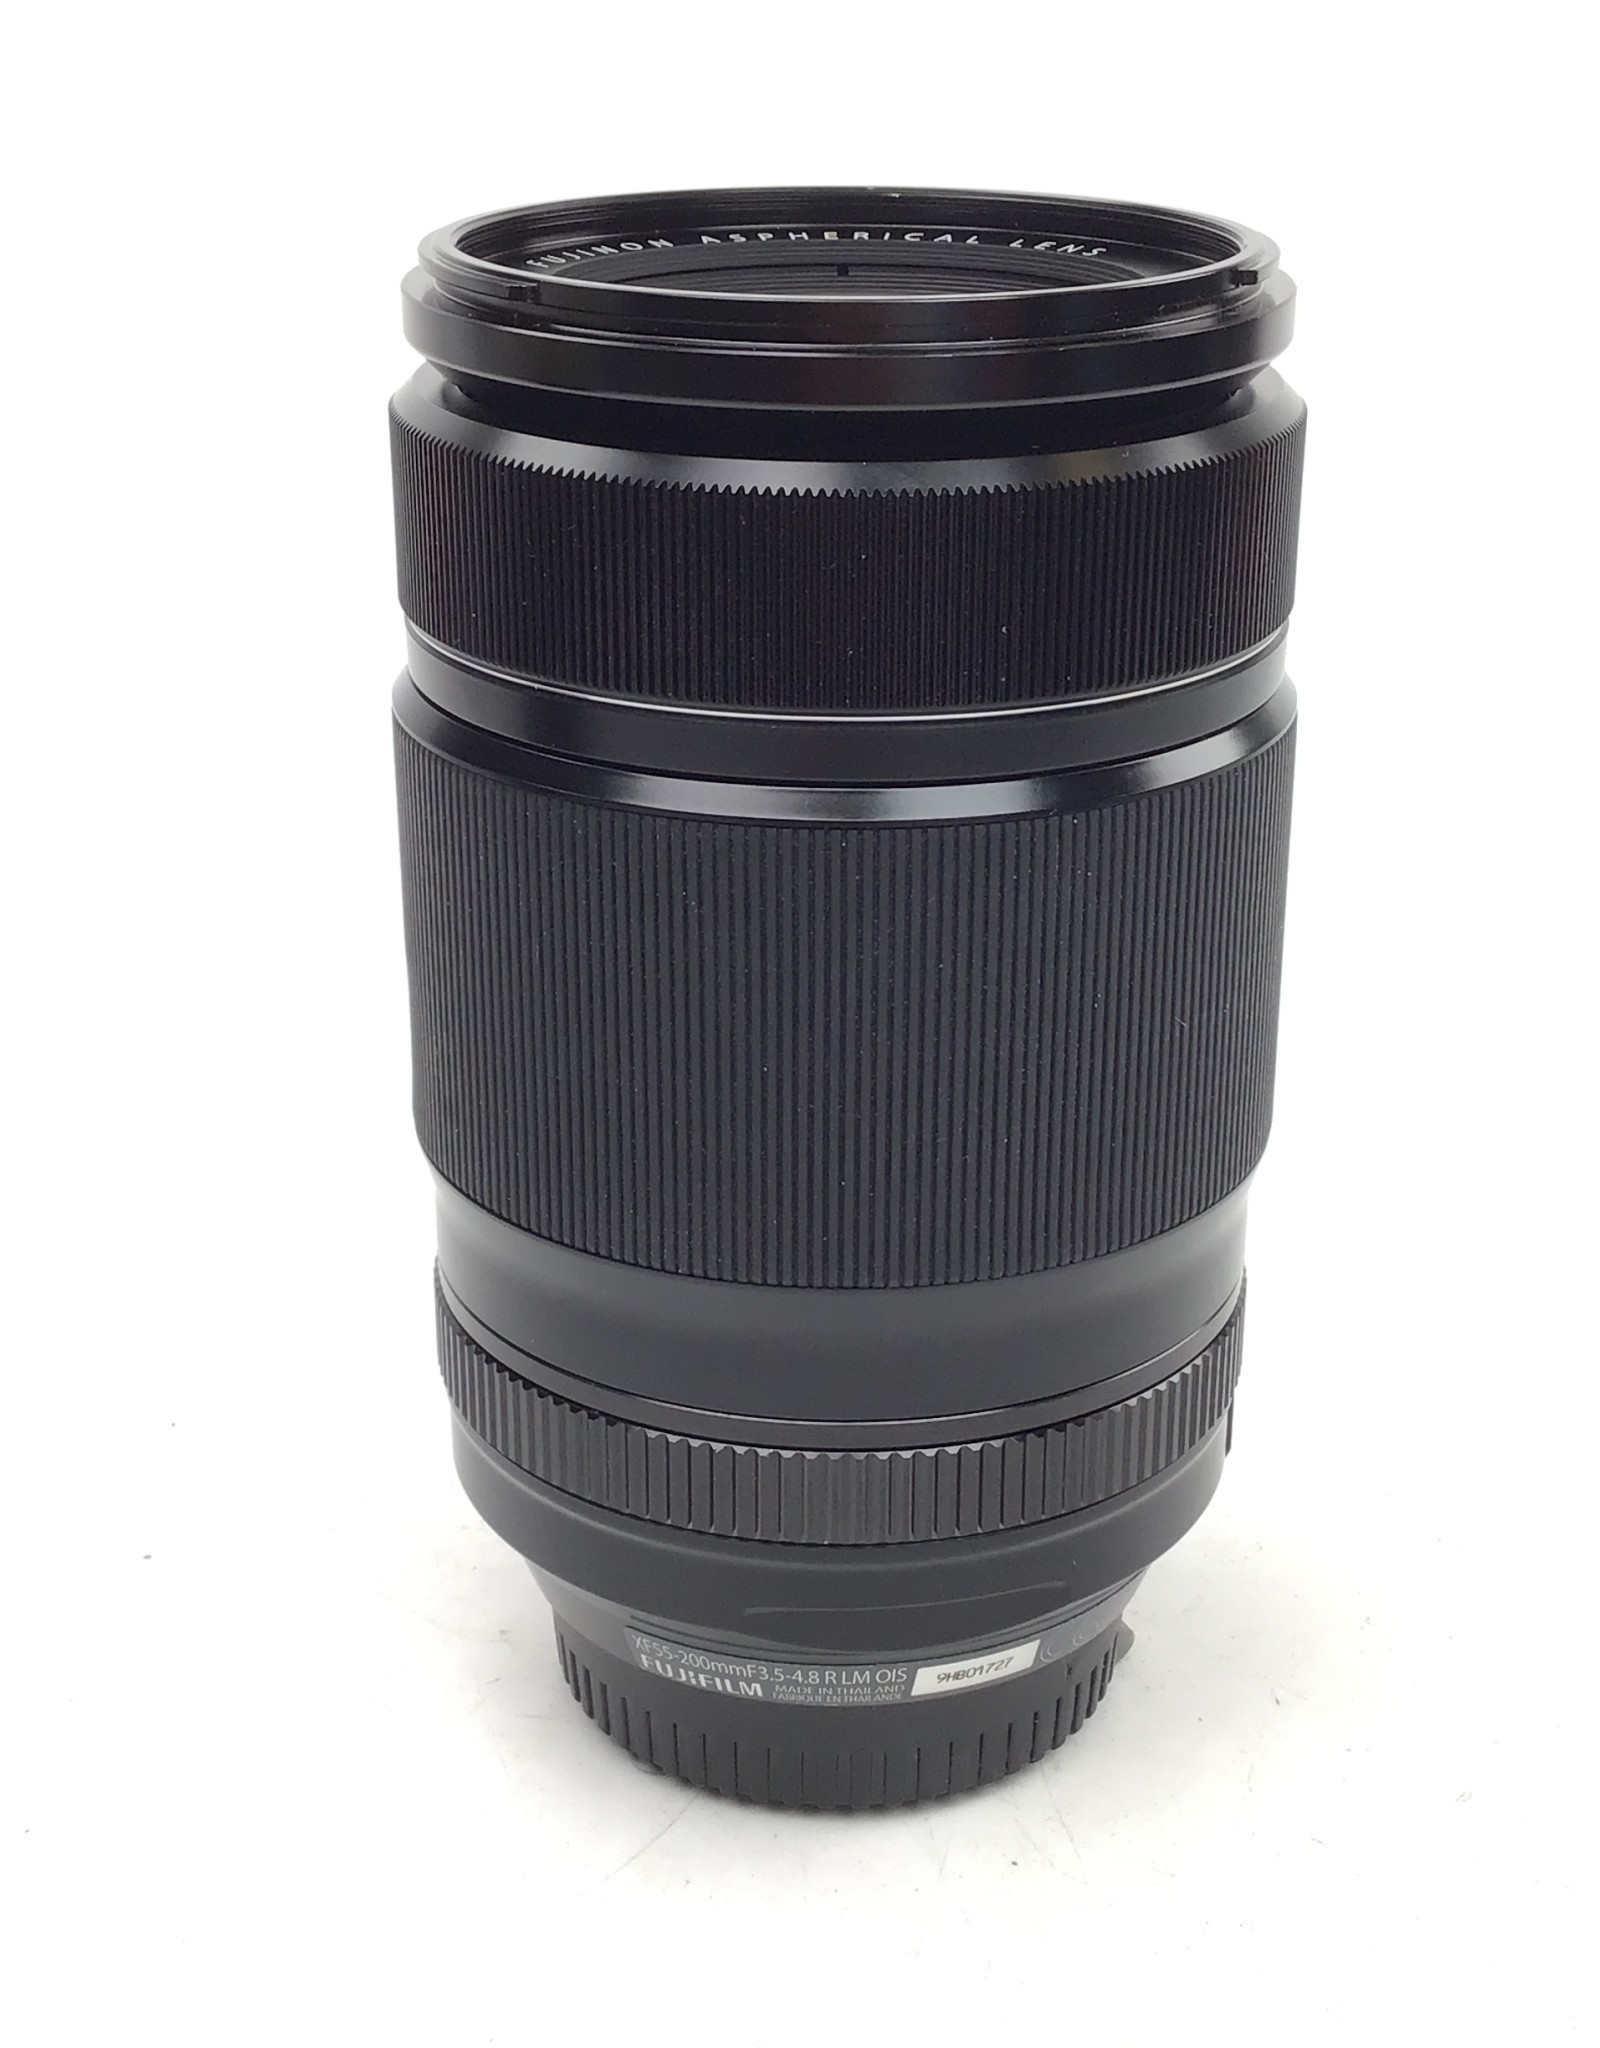 FUJI Fuji Super EBC 55-200mm f3.5-4.8 R LM OIS Lens Used Good